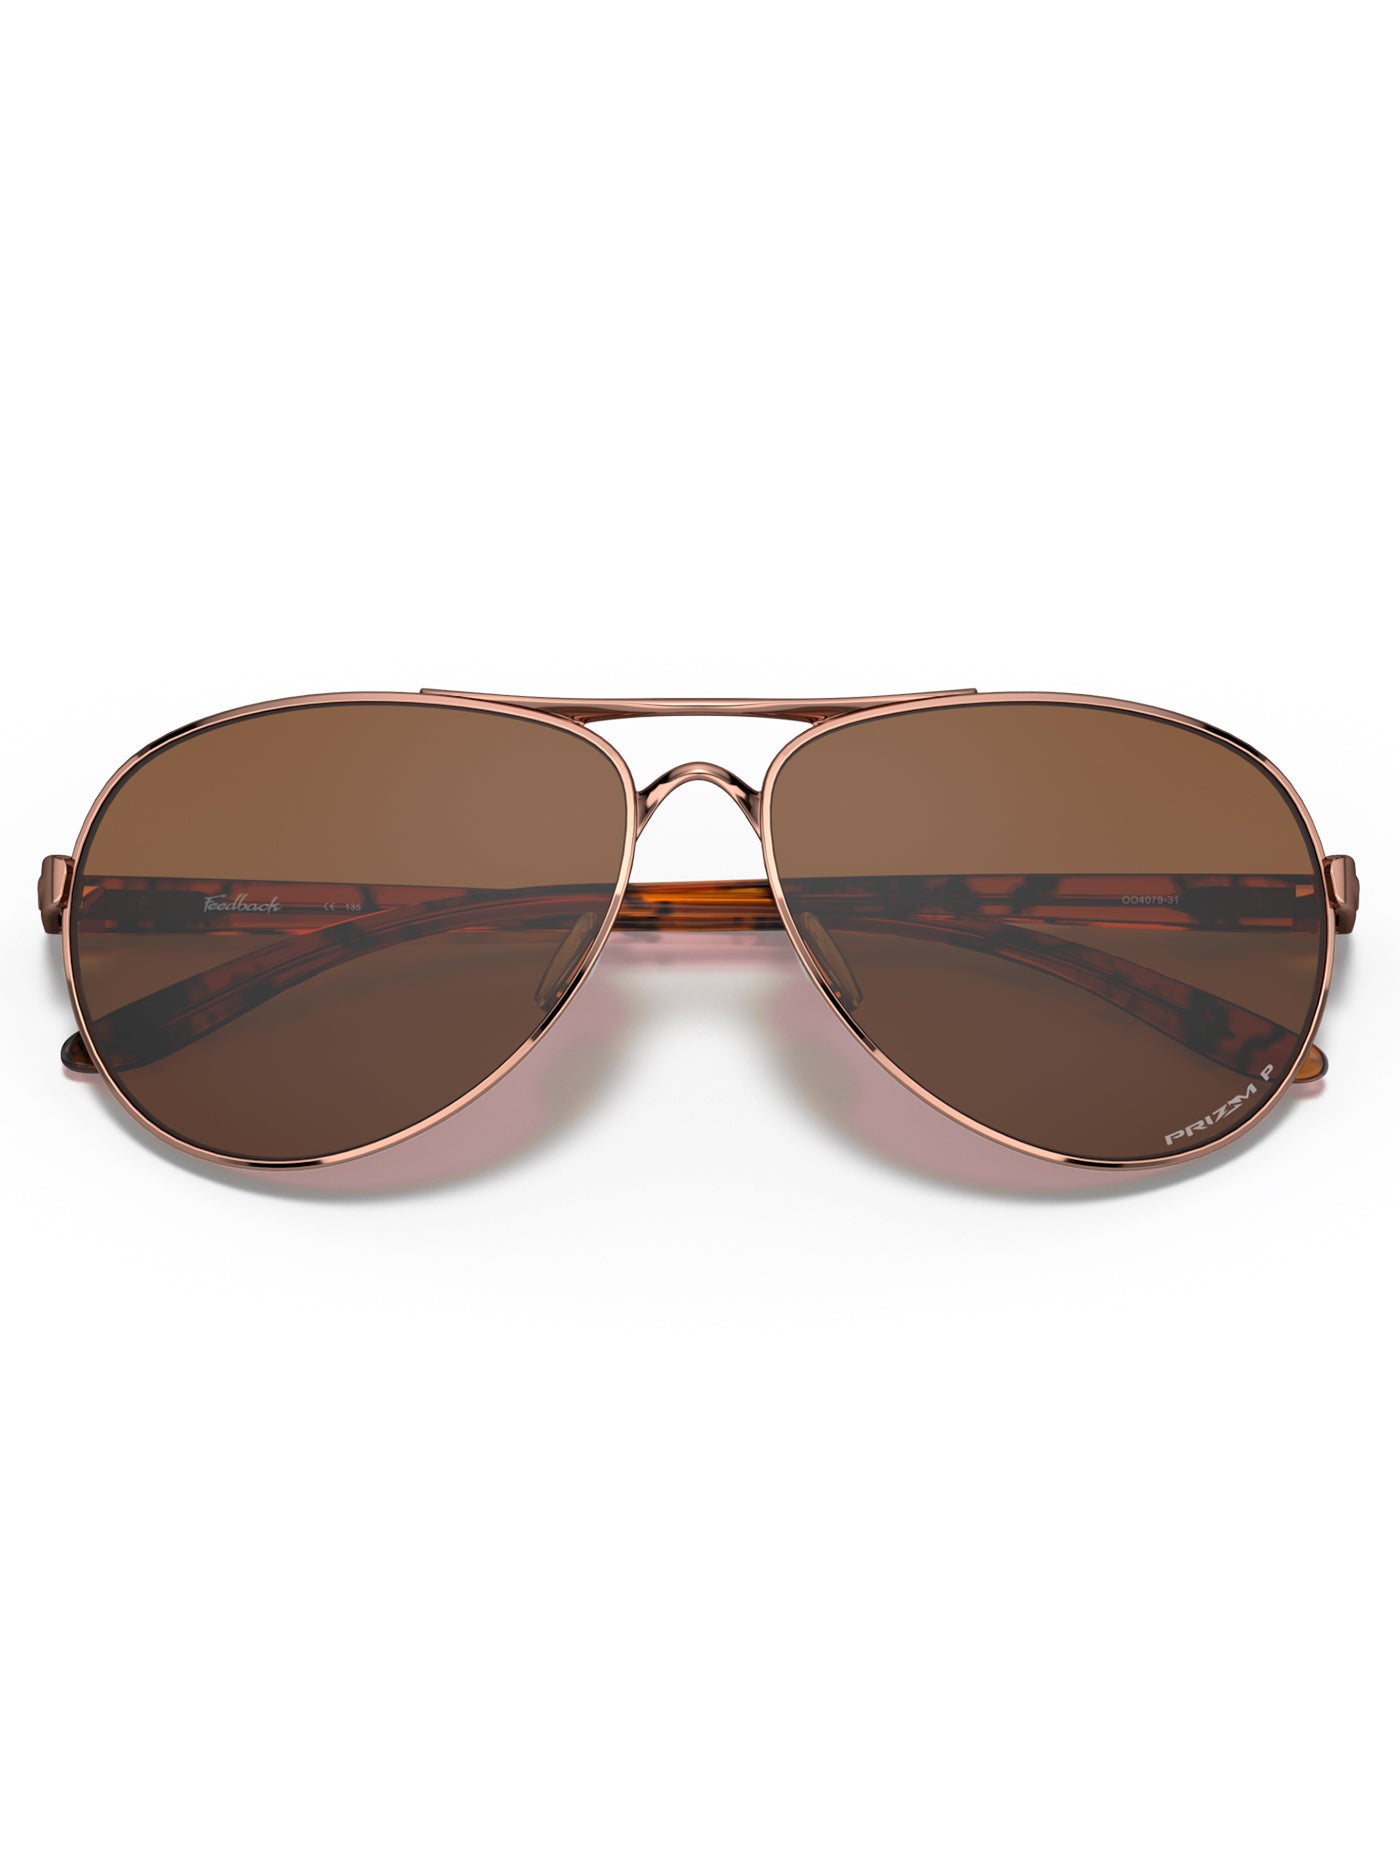 Oakley Feedback Rose Gold/Prizm Tungsten Irid Polarized Sunglasses